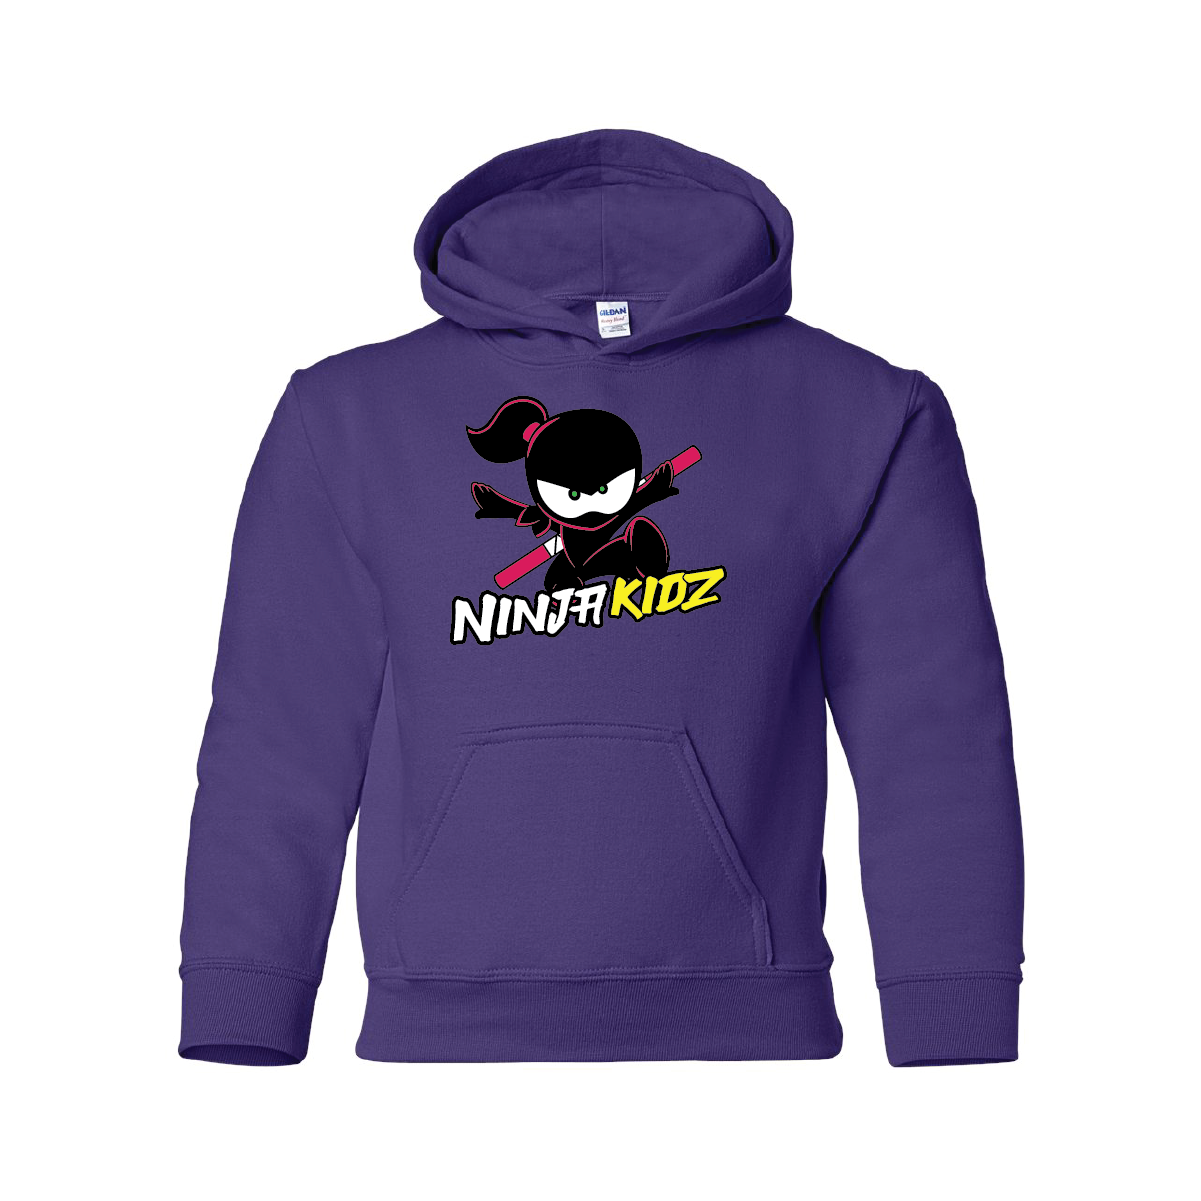 Ninja Kidz Original Girl Hoodie 3.0 ©